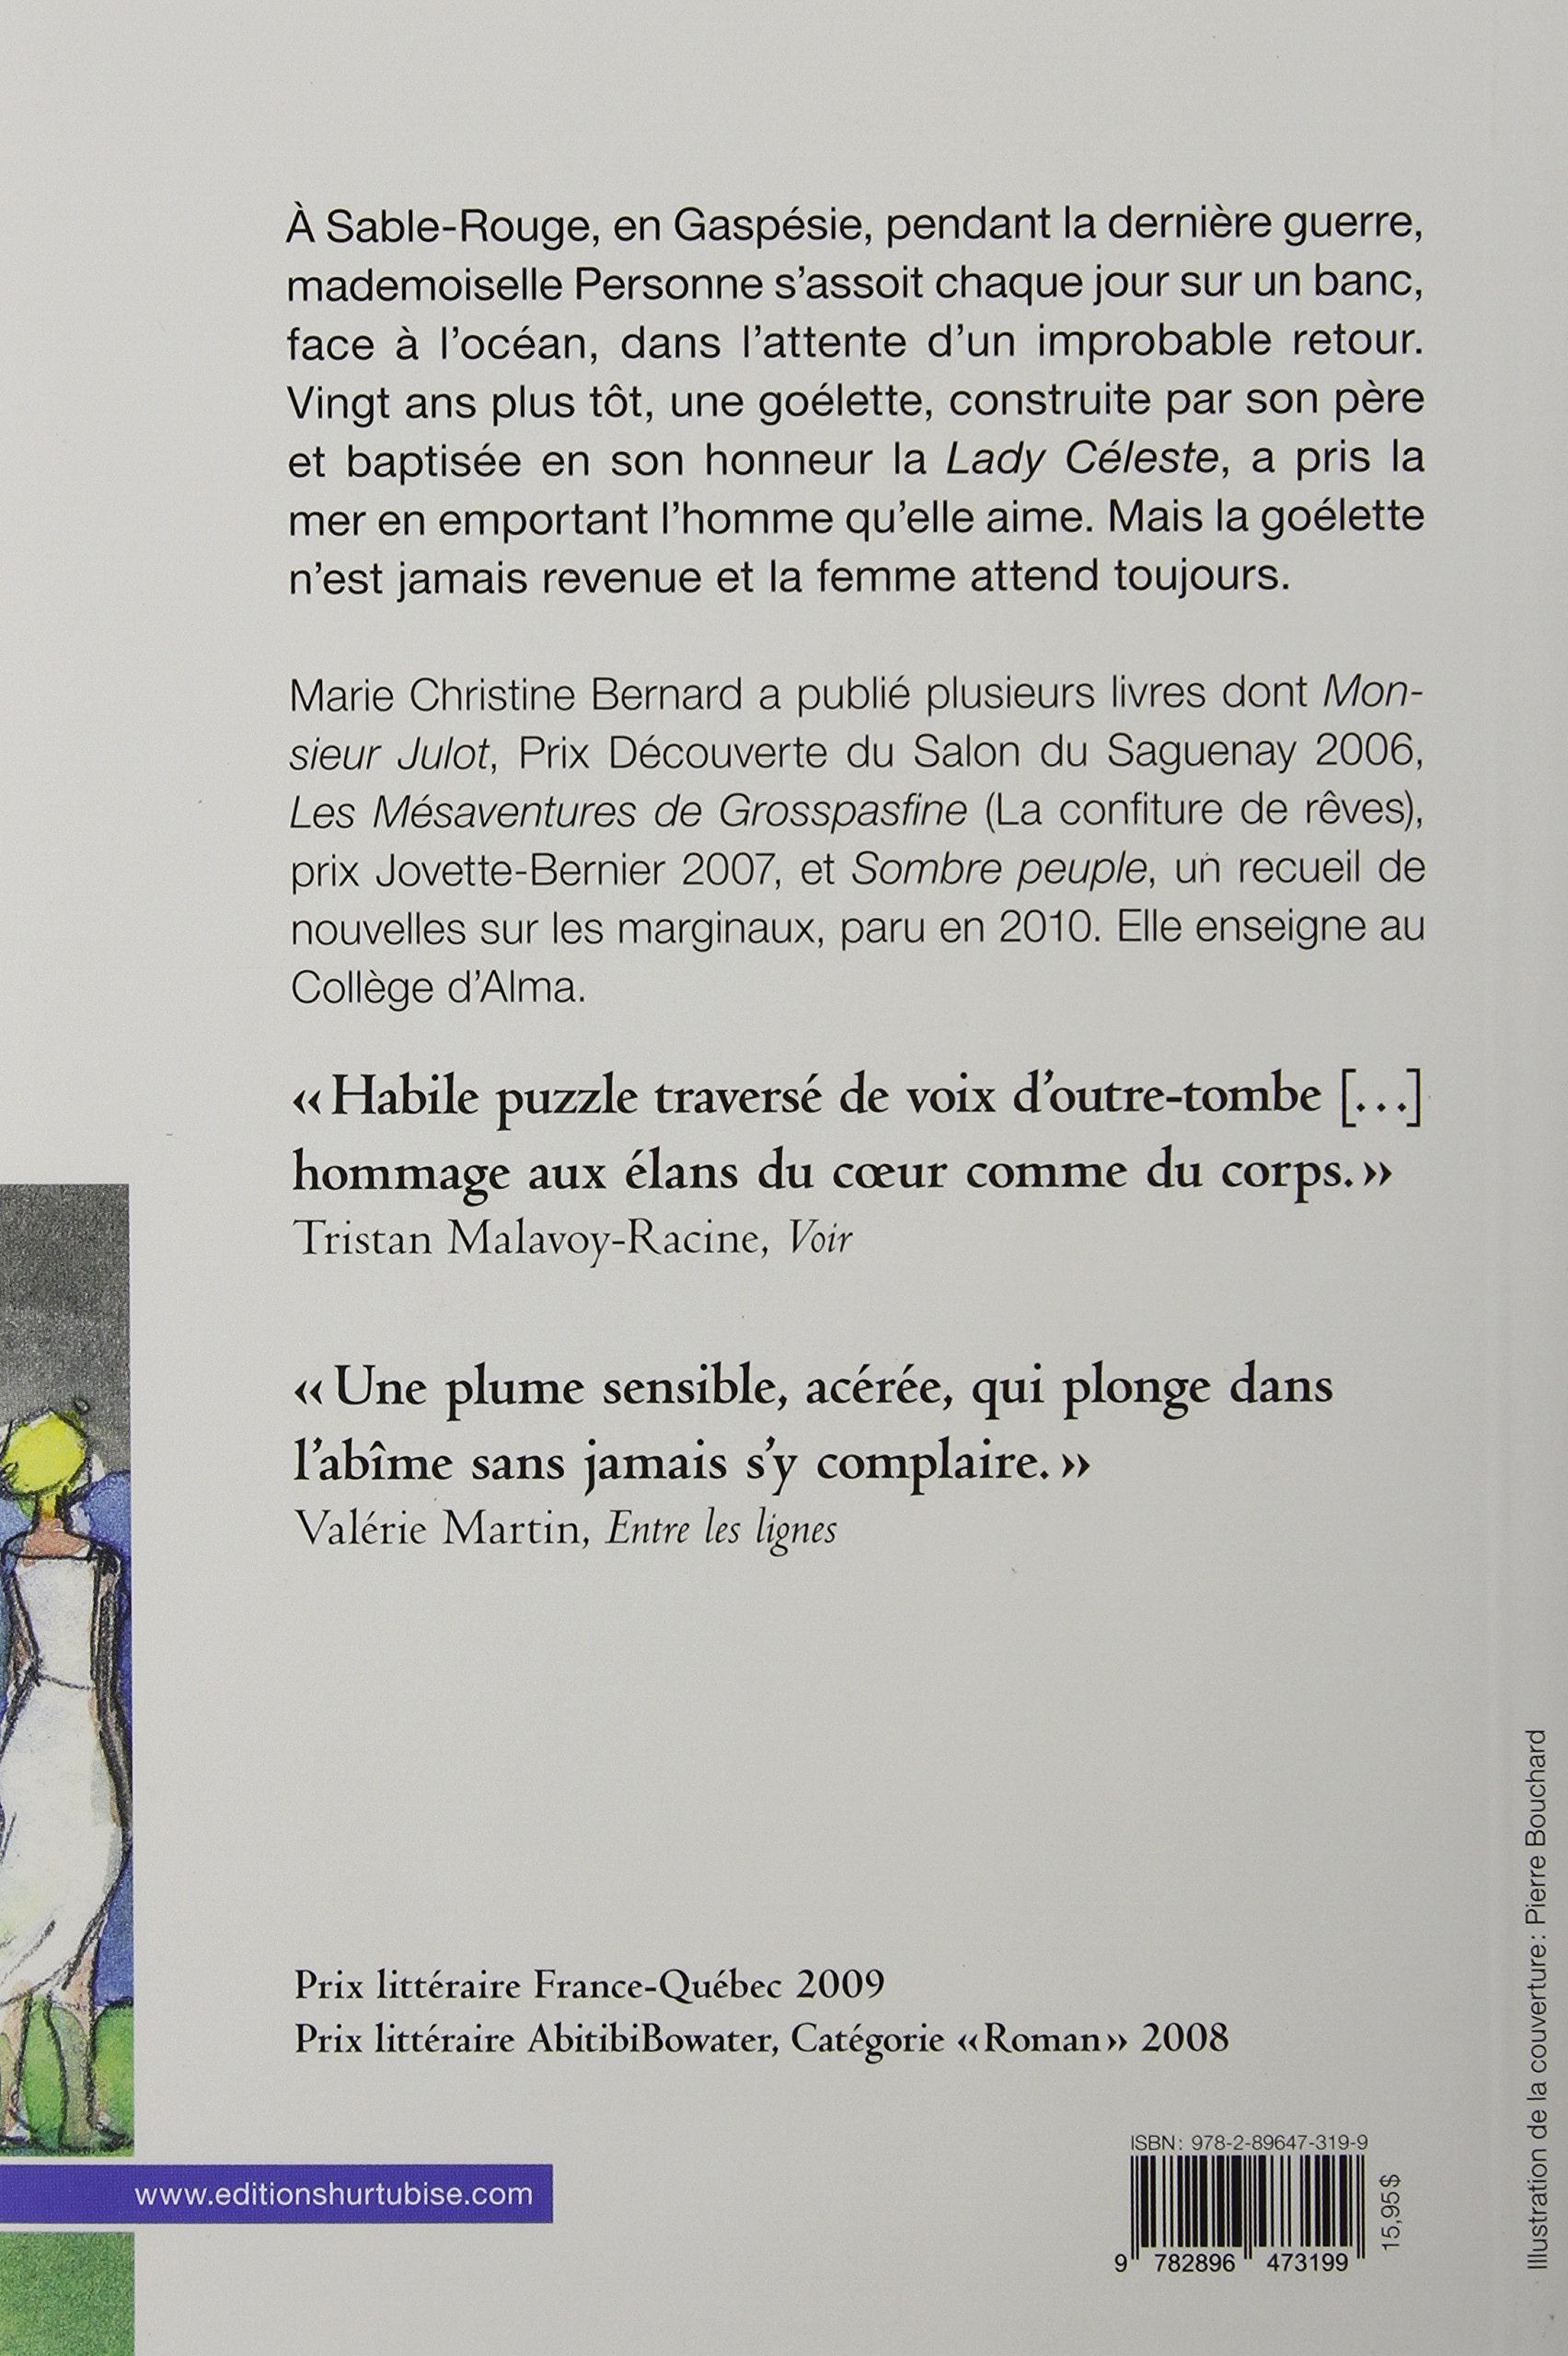 Mademoiselle Personne (Marie Christine Bernard)